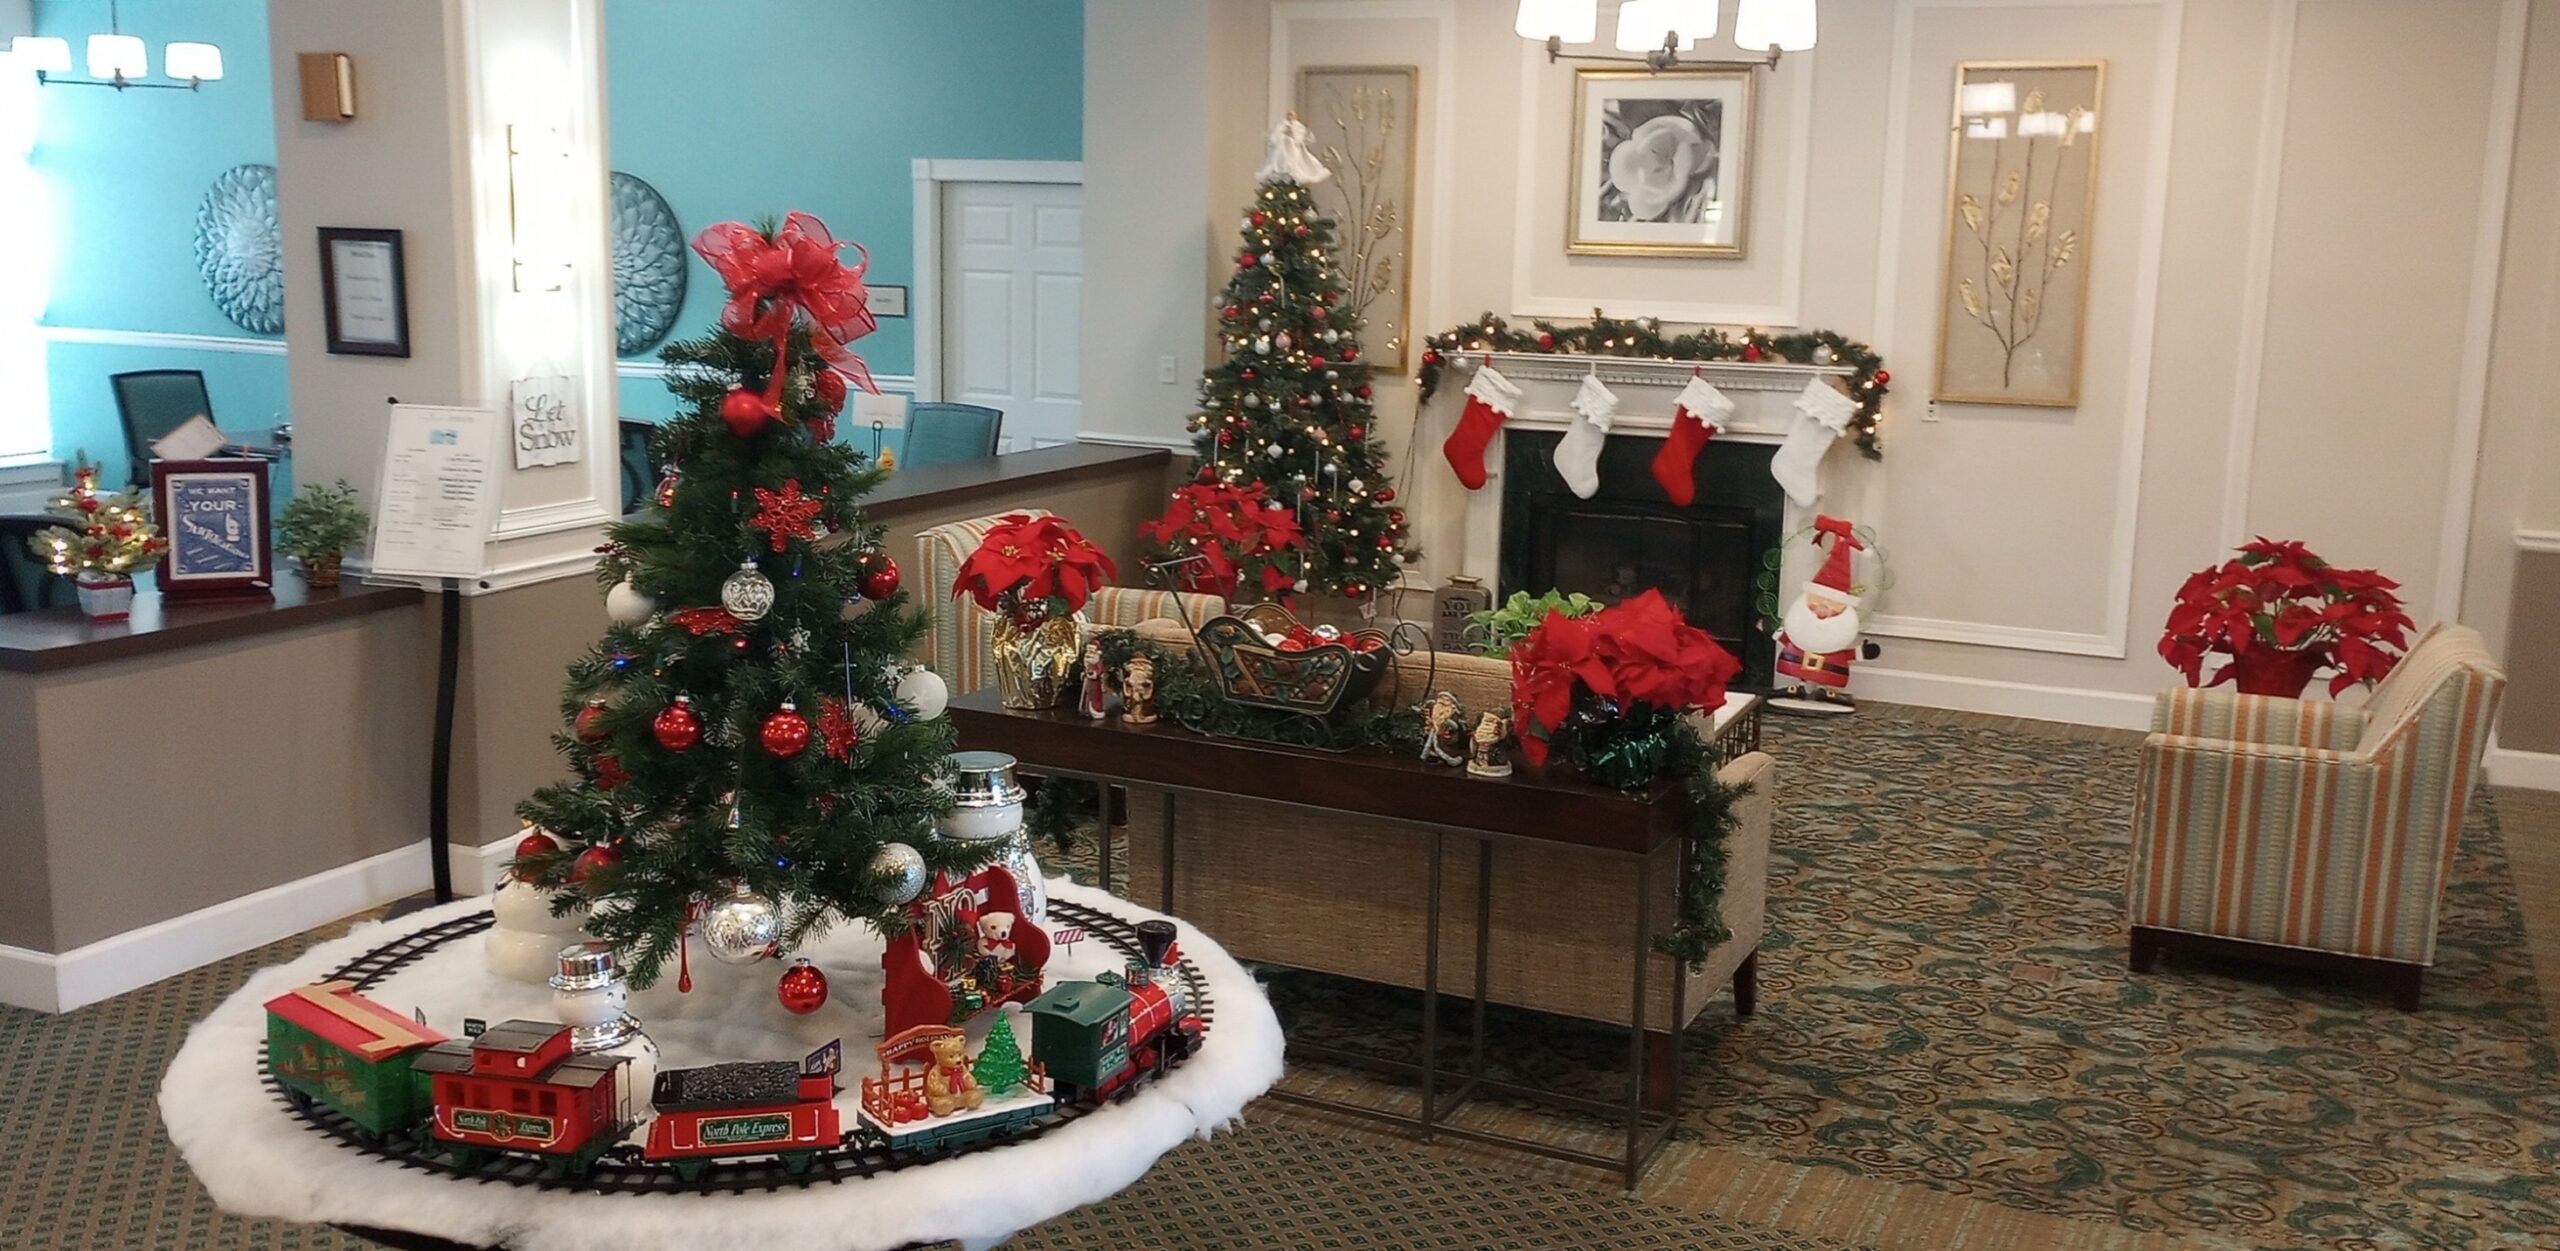 Senior Living Define the Best Christmas Gift

Legacy Ridge at Brookstone 